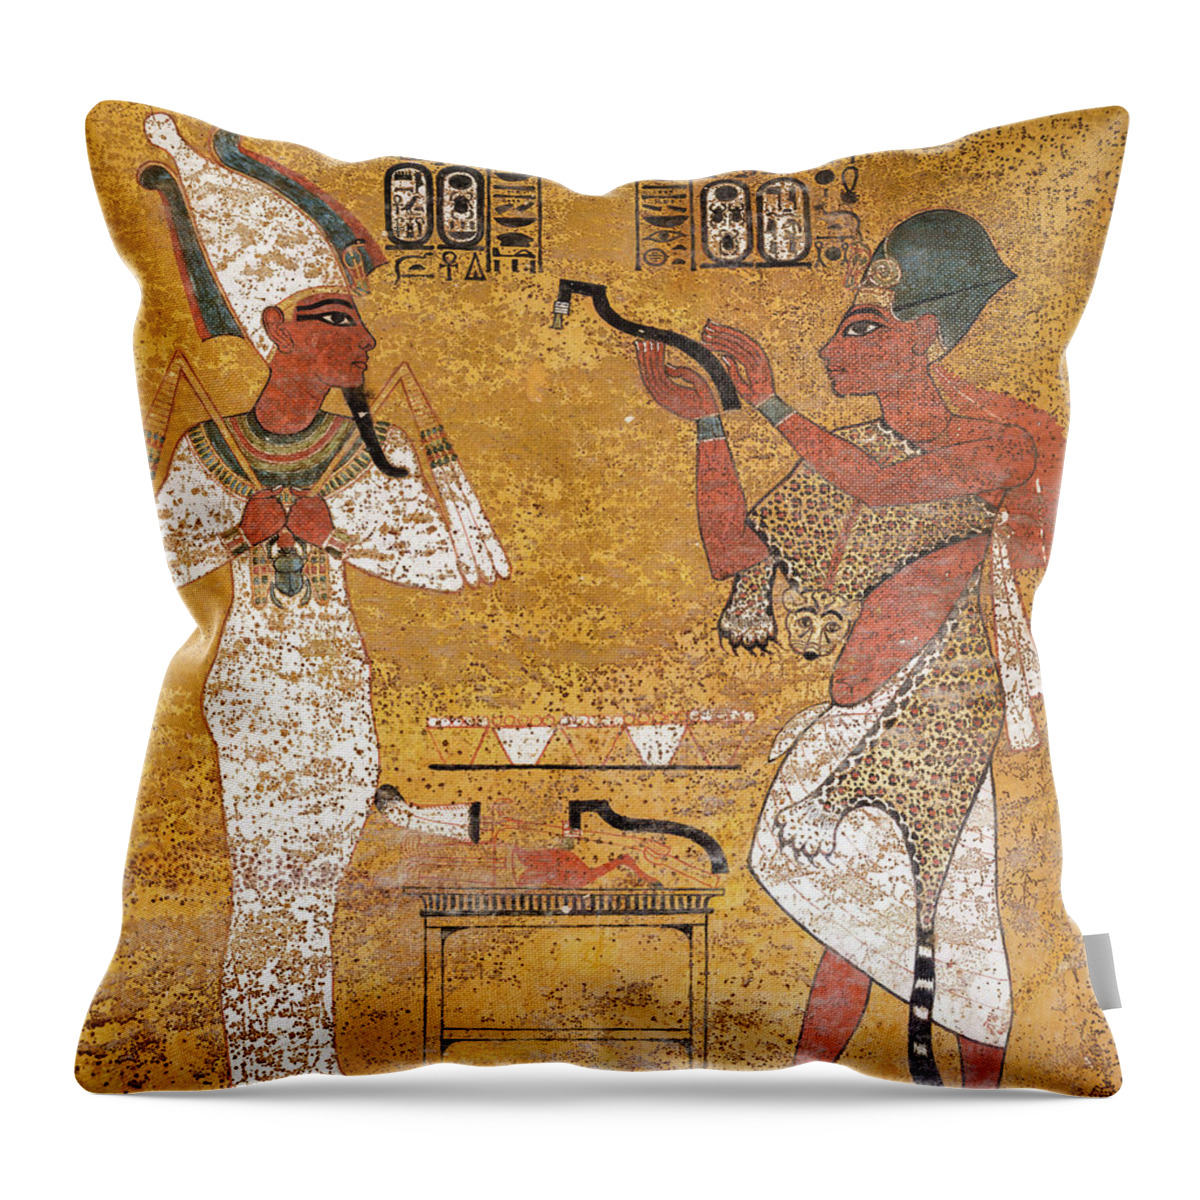 Tomb Of Tutankhamun Throw Pillow featuring the painting Tomb of Tutankhamun, Wall Decorations by Egyptian History